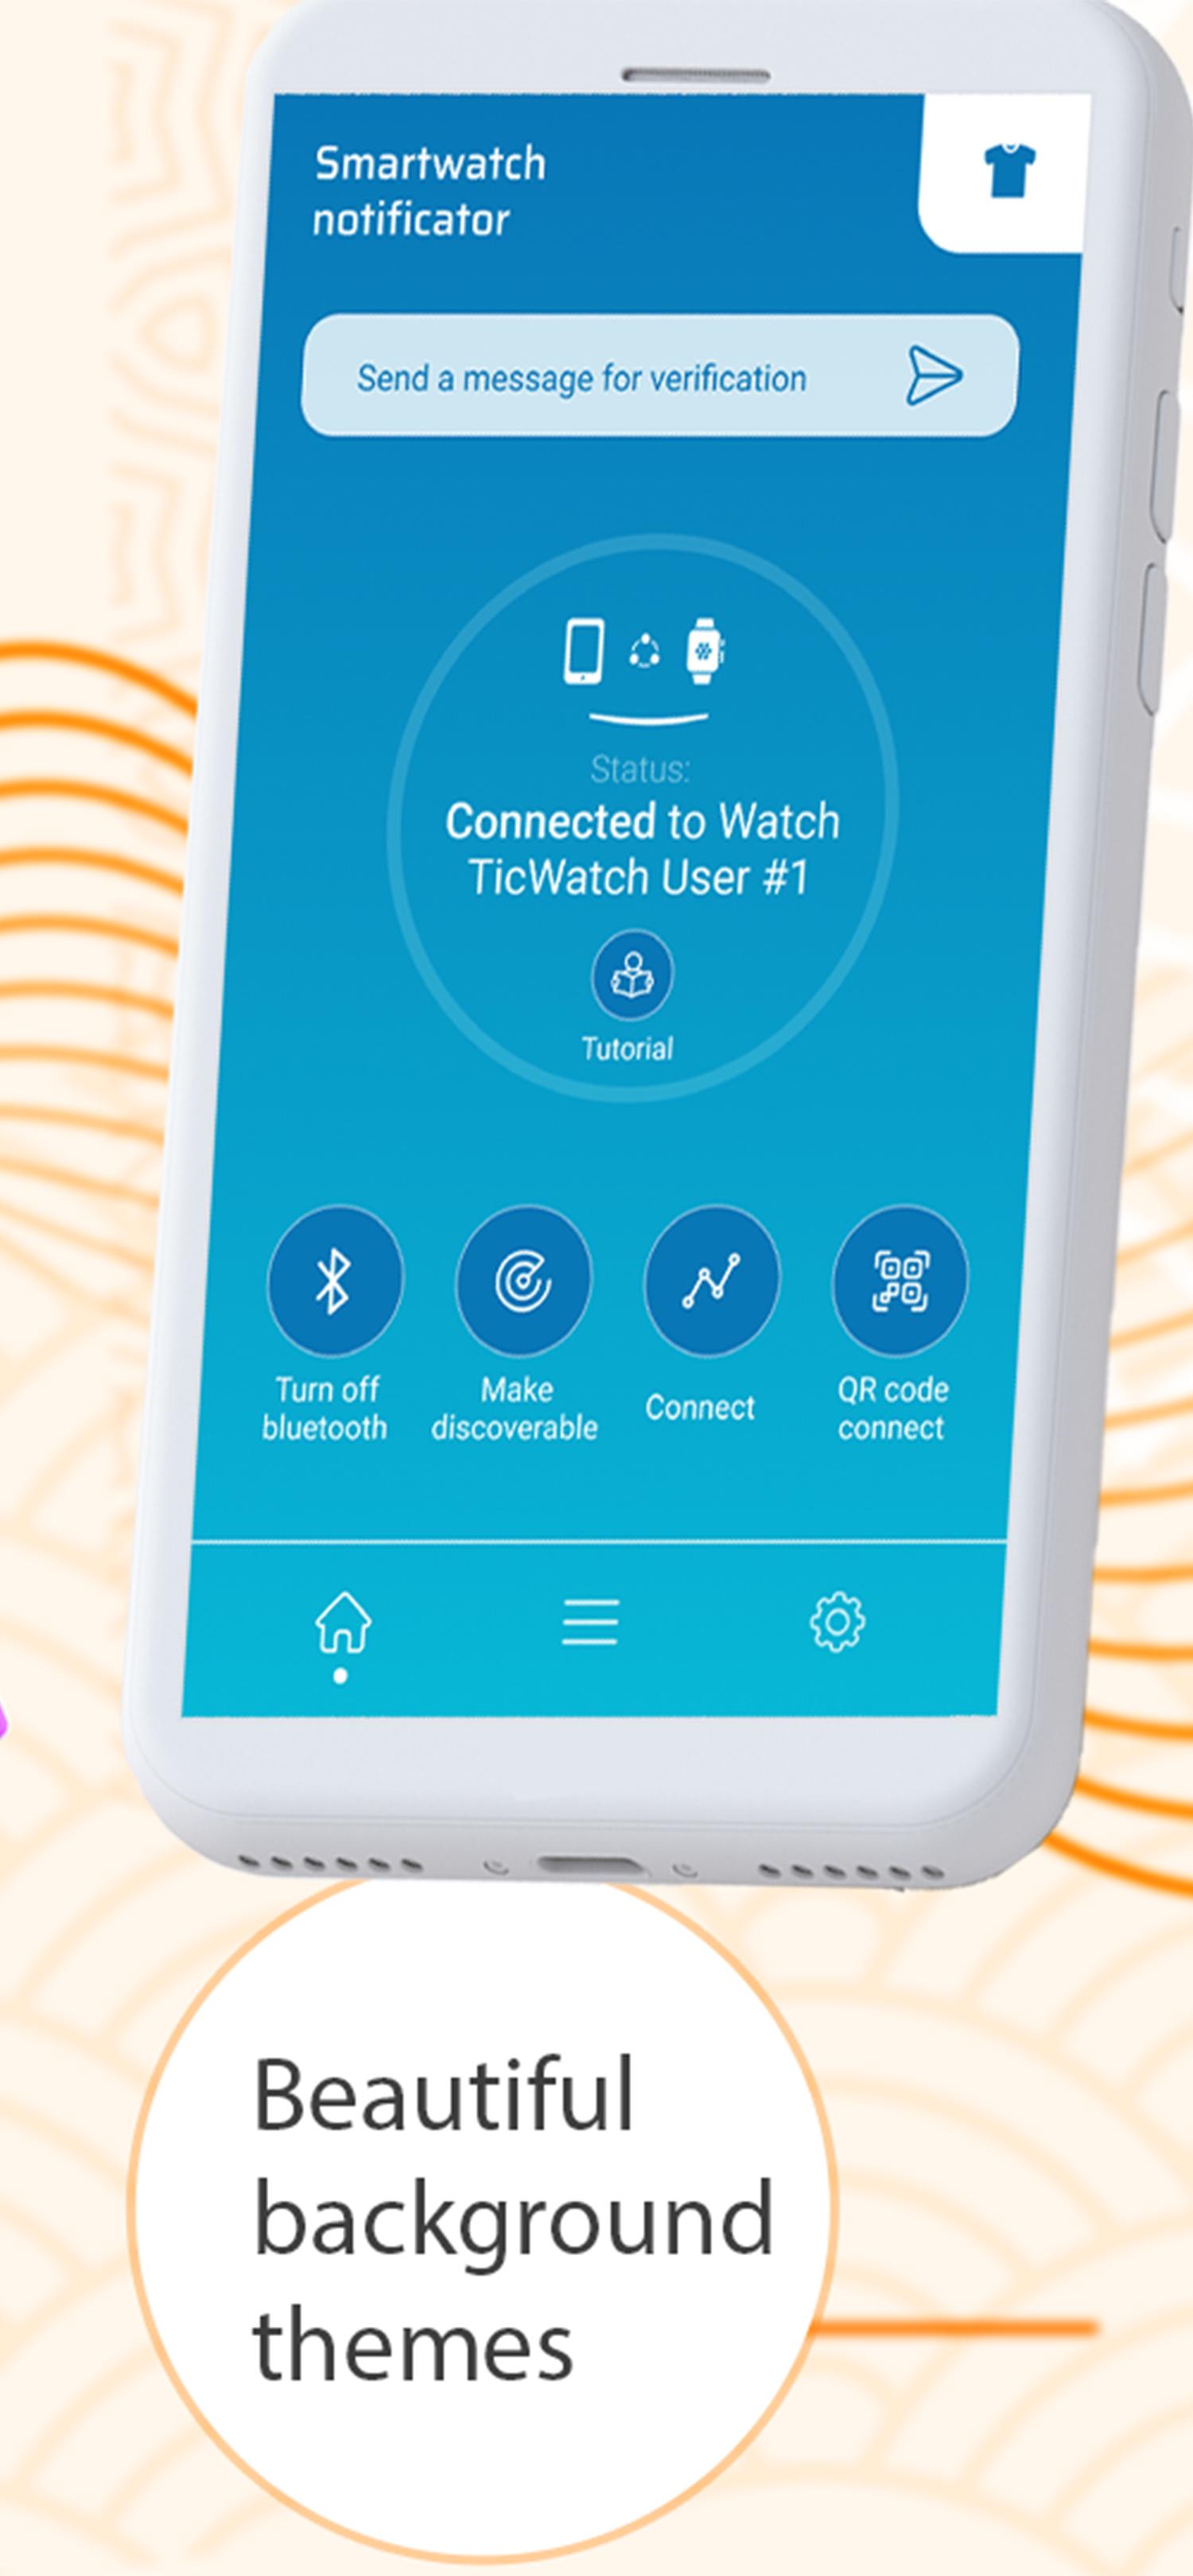 bt notification app for smartwatch